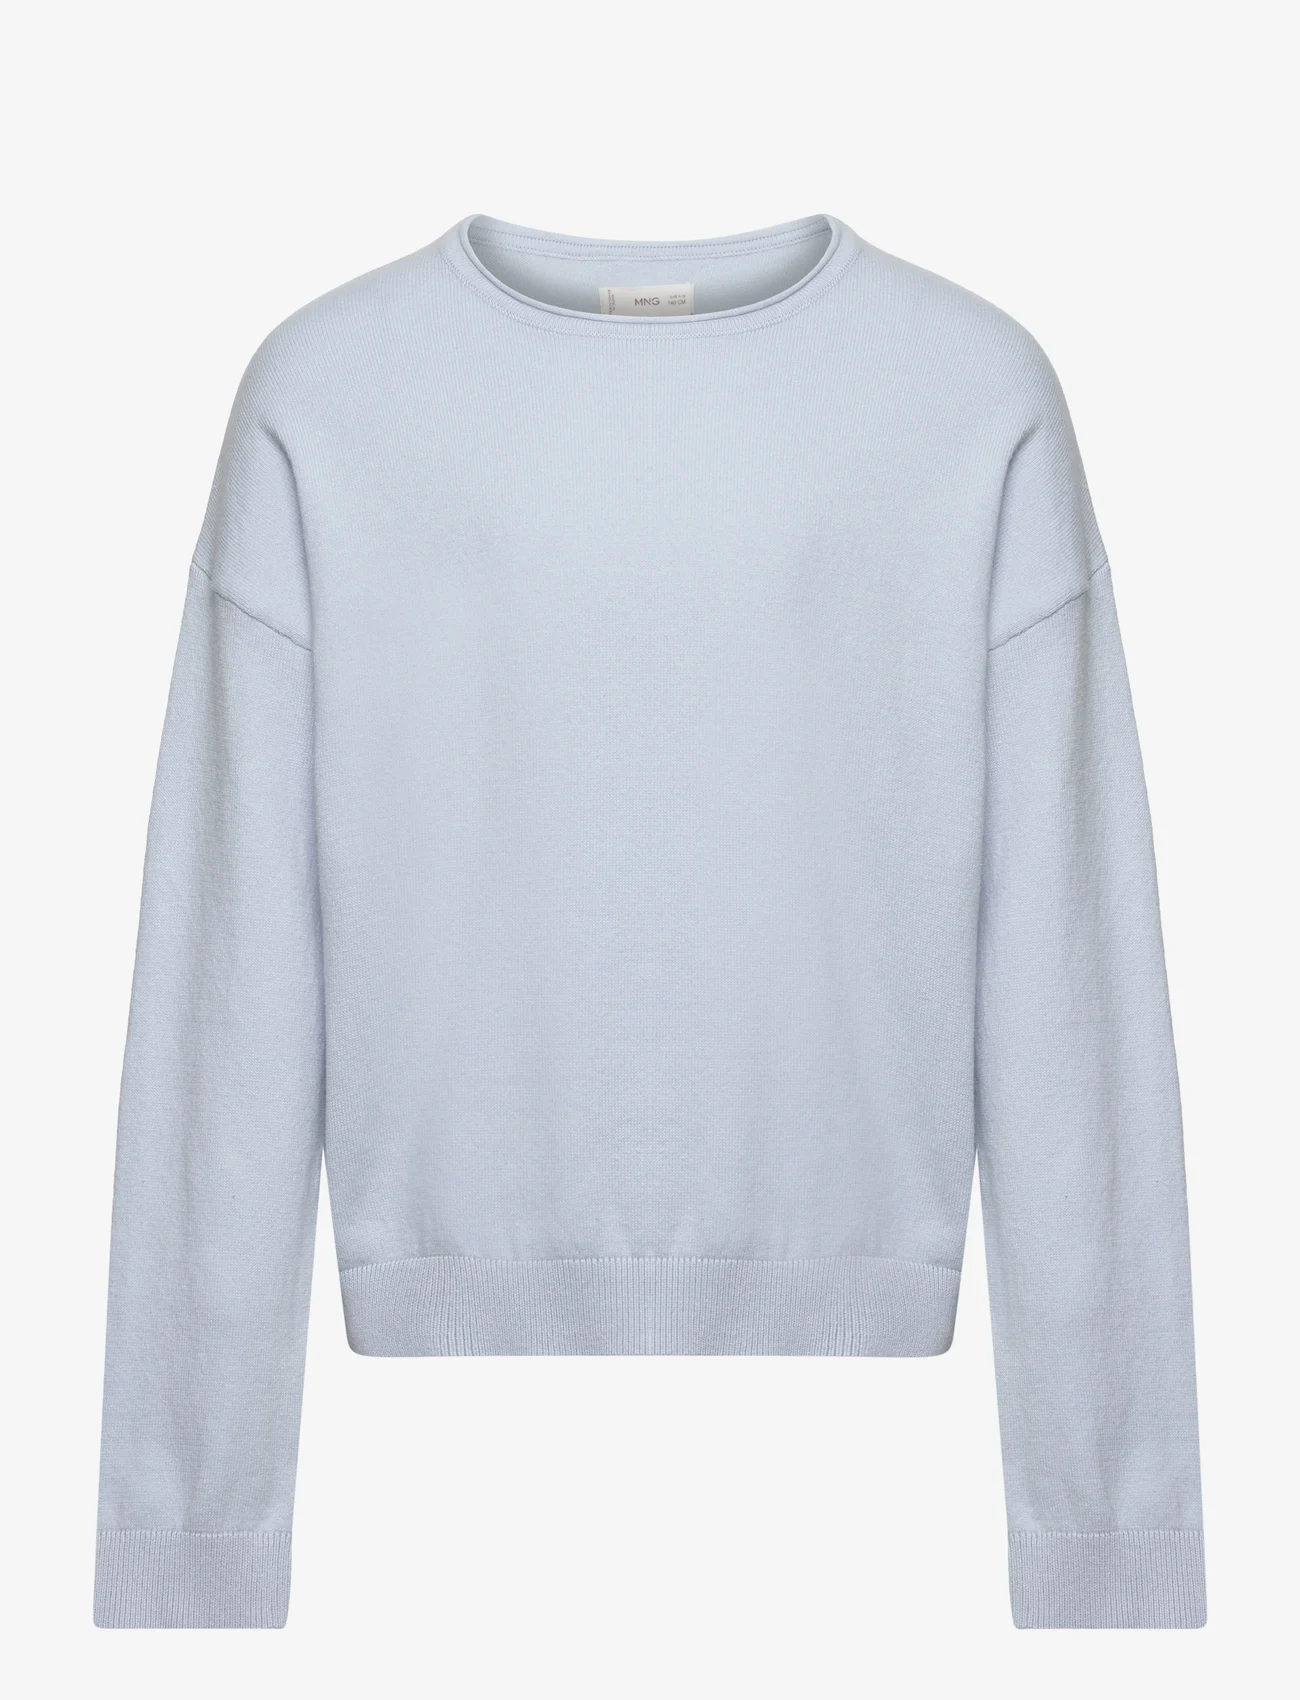 Mango - Knit cotton sweater - trøjer - lt-pastel blue - 0